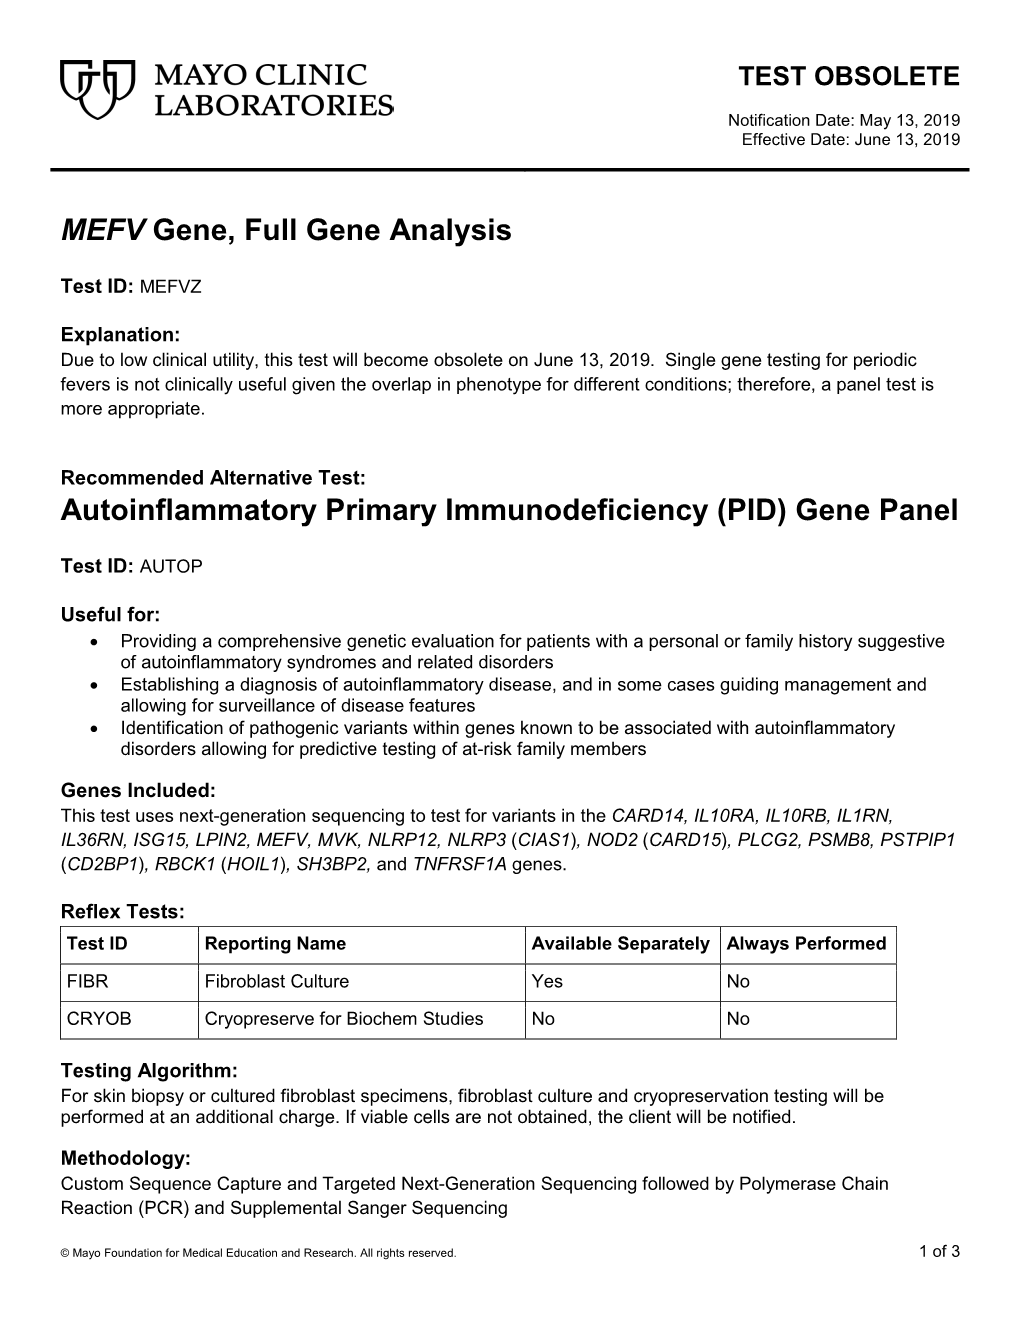 MEFV Gene, Full Gene Analysis Autoinflammatory Primary Immunodeficiency